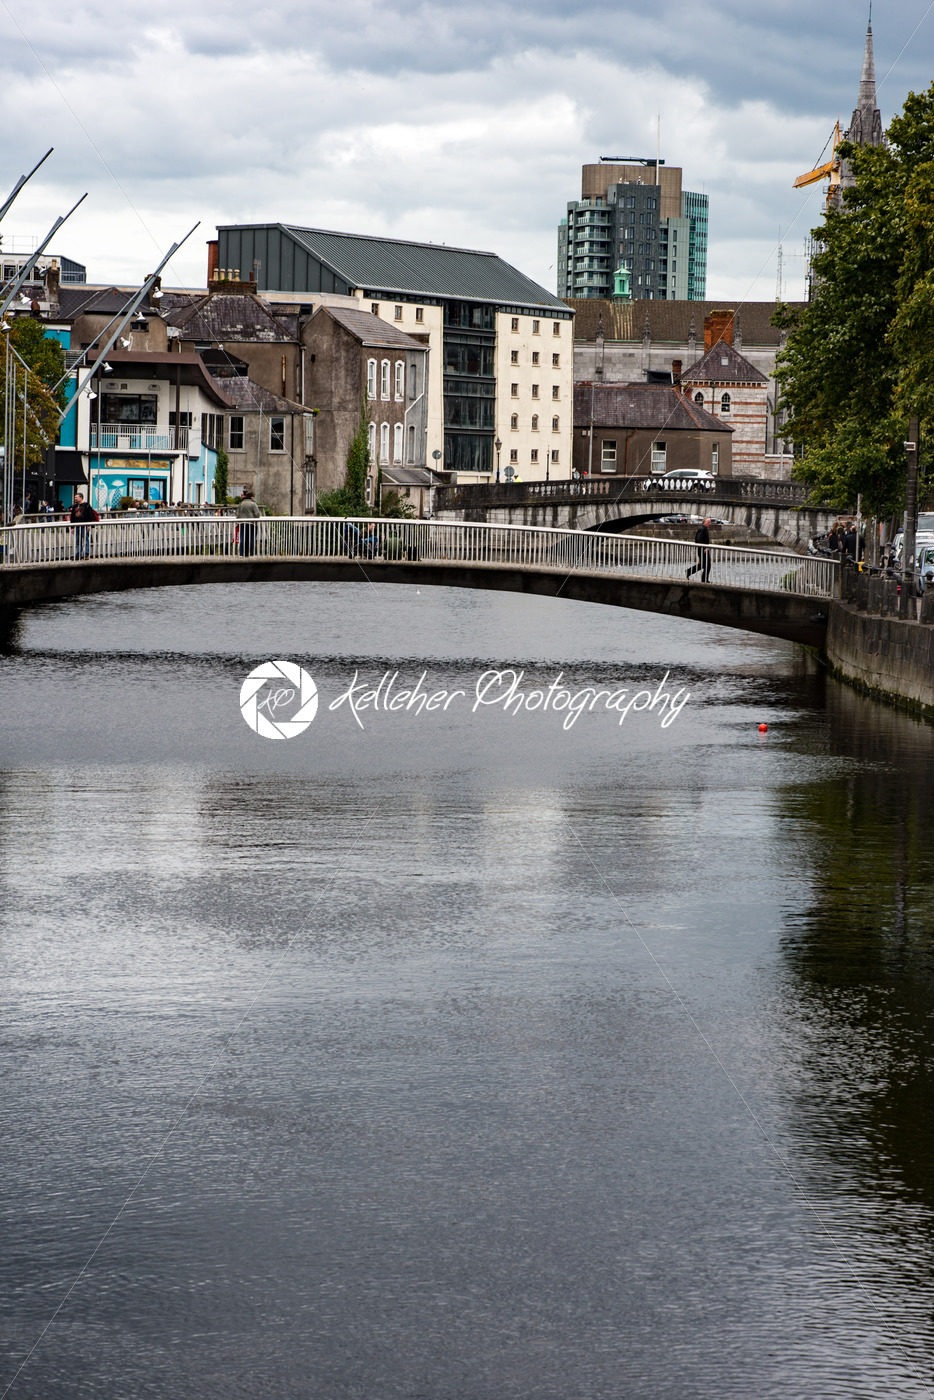 CORK, IRELAND – AUGUST 19, 2017: City Center of Cork, Ireland - Kelleher Photography Store